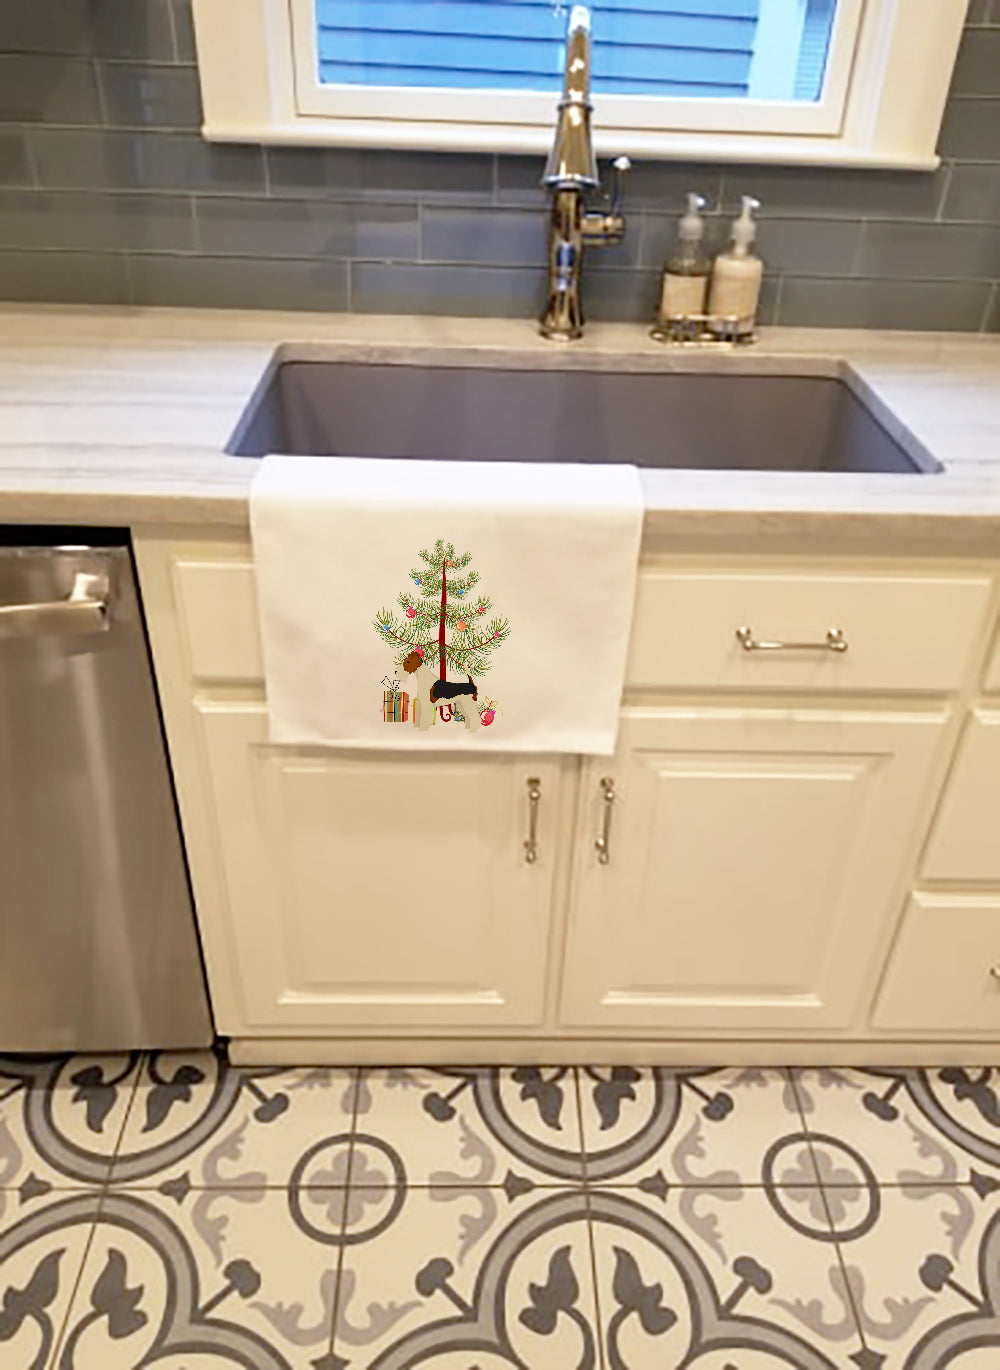 Buy this Fox Terrier Christmas Tree White Kitchen Towel Set of 2